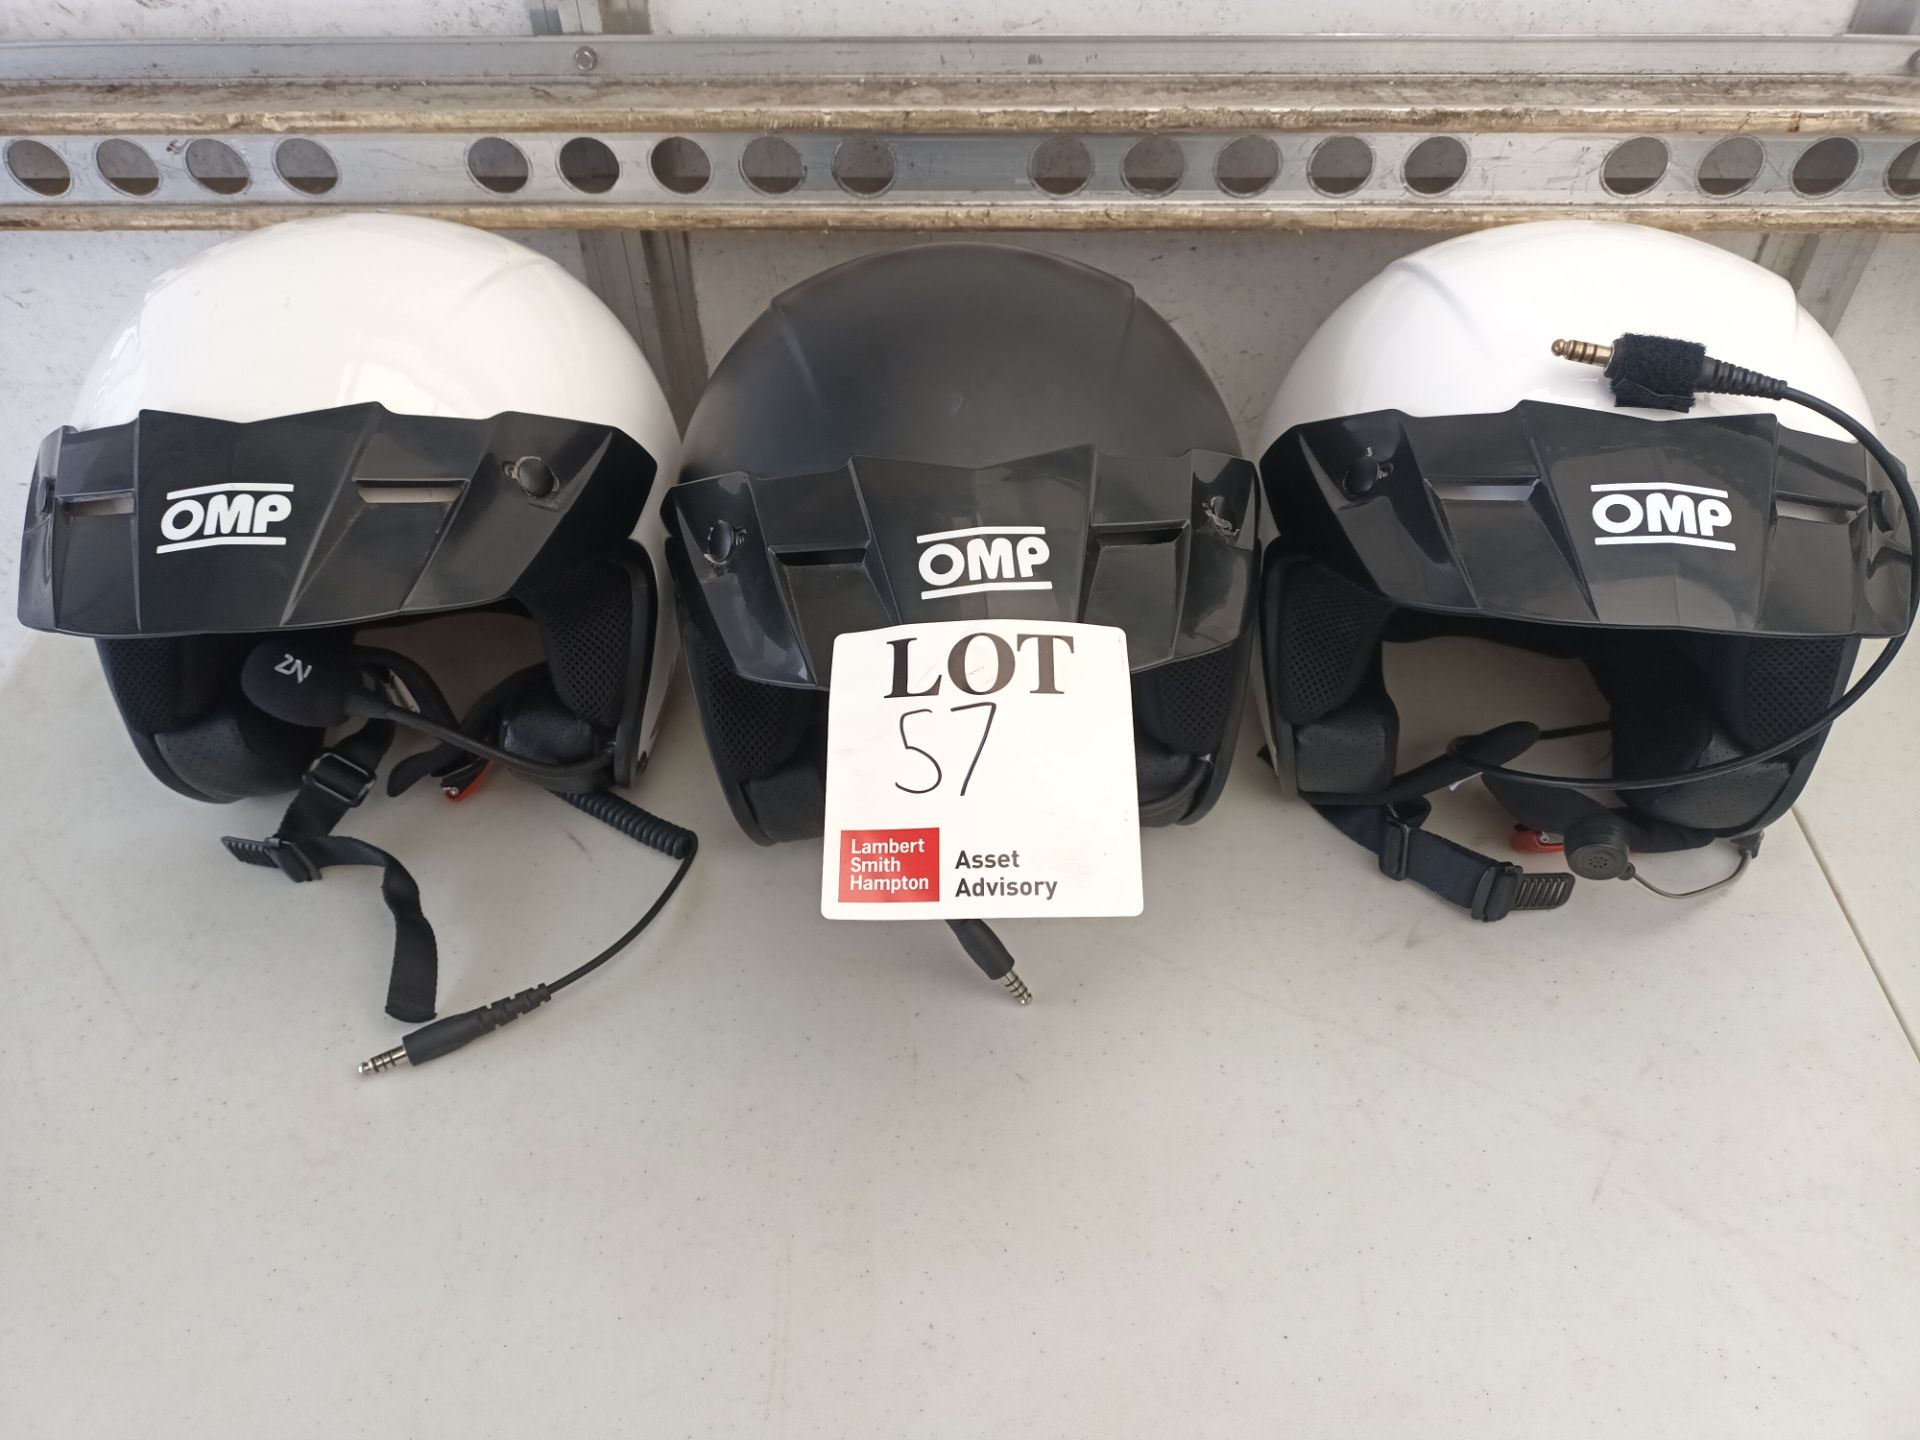 Three various OMP rally crash helmets